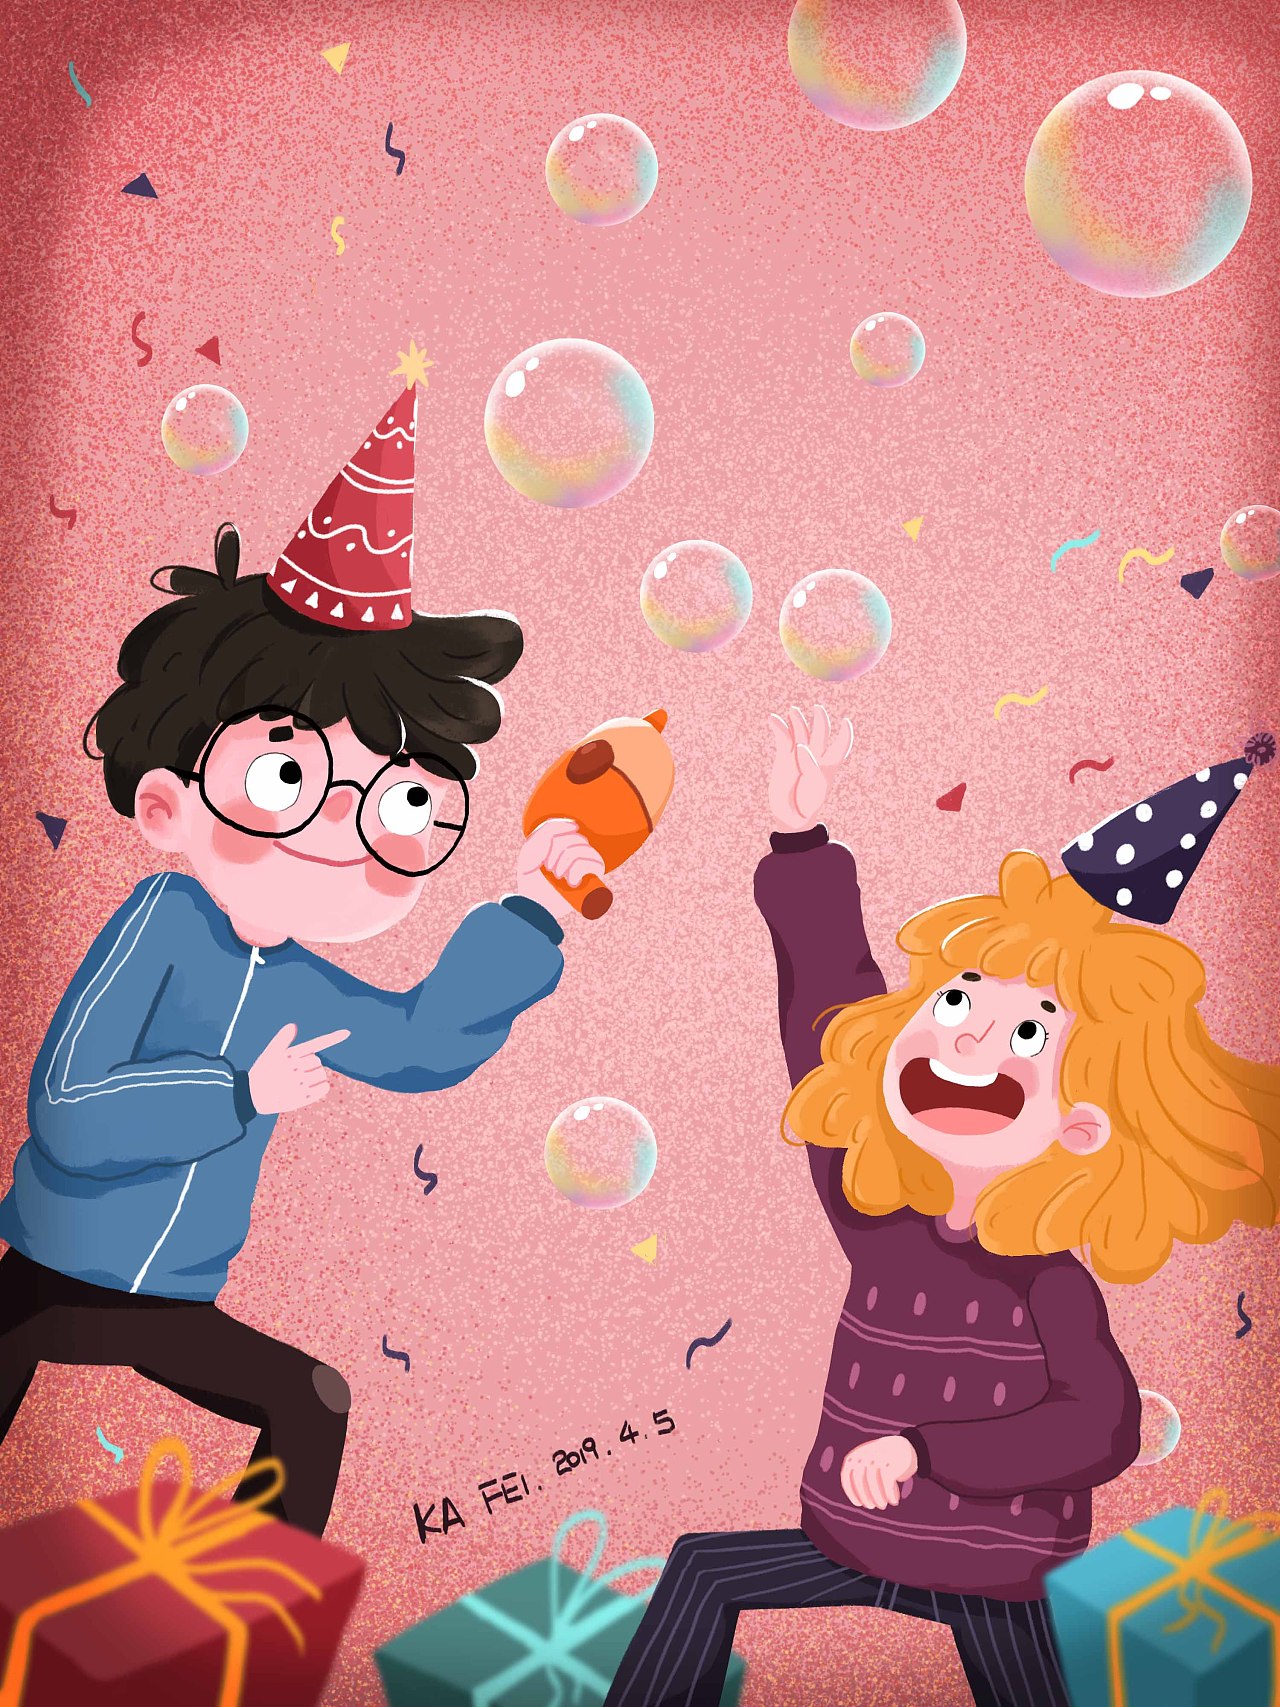 Blow Bubble PNG Image, Childrens Day Child Blowing Bubbles Illustration, Color Bubble, Cartoon ...